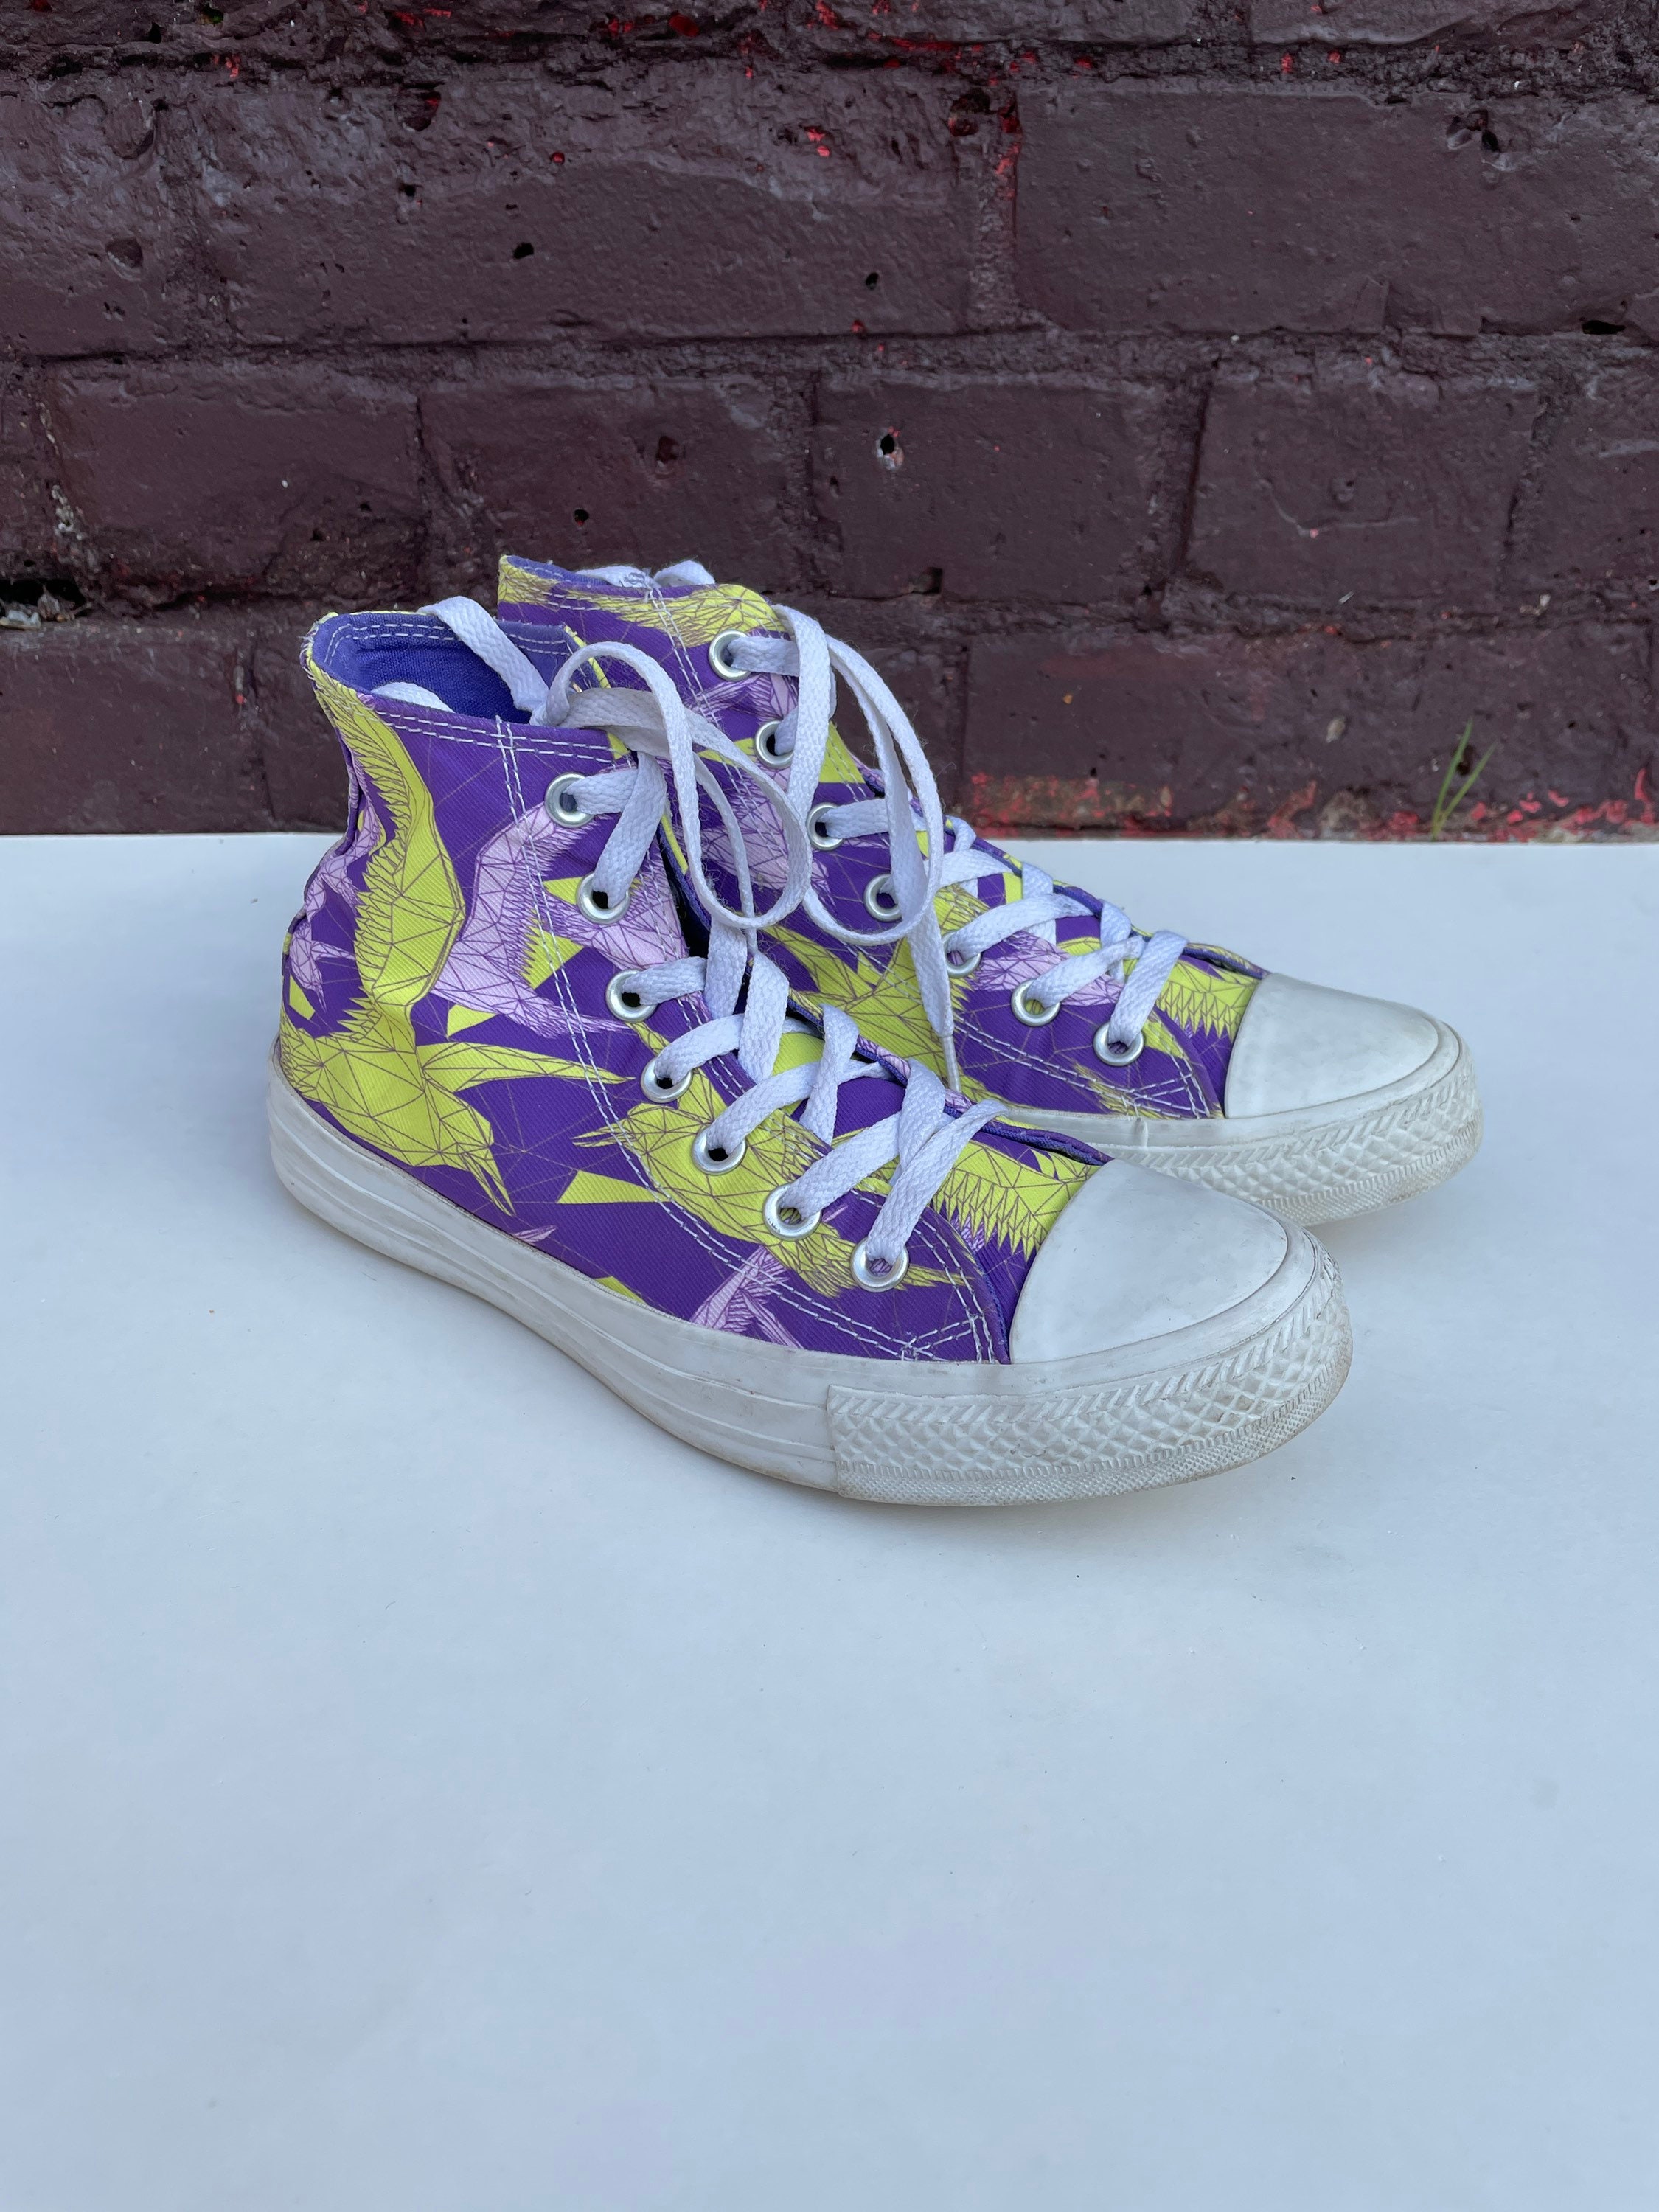 Vintage Converse Hi Tops Purple & Yellow | Etsy